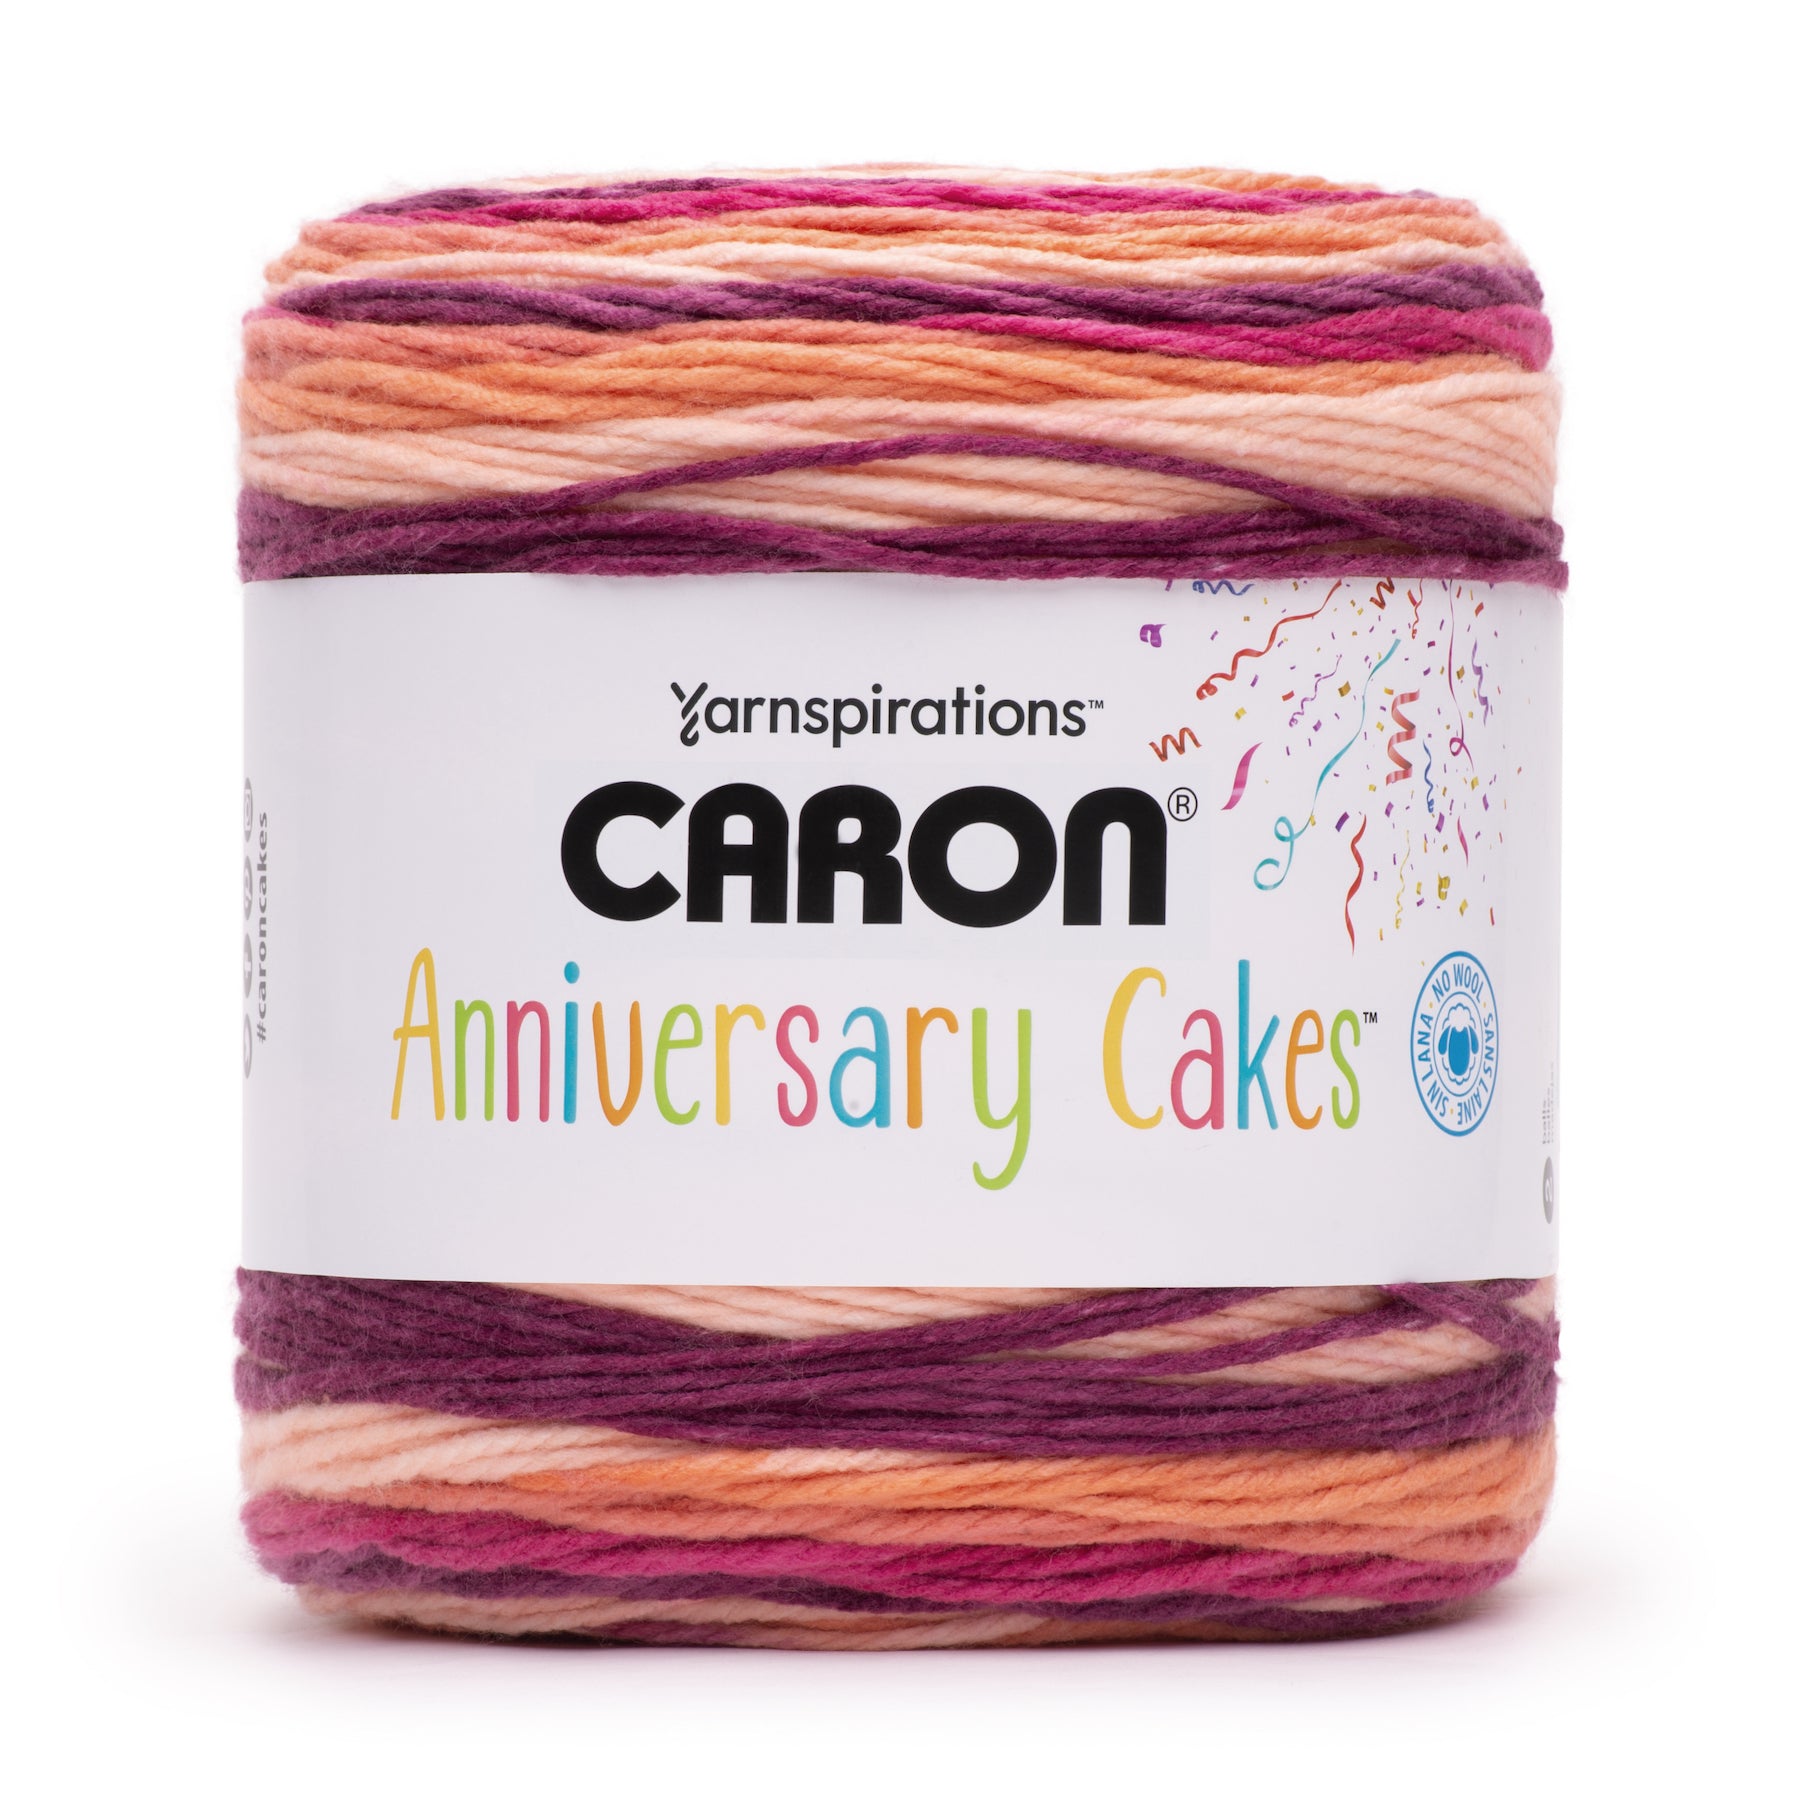 Yarnspirations Caron Anniversary Cakes Yarn Grape 35.3 oz 1061 yds 3183 Ft  Bulk - Tony's Restaurant in Alton, IL